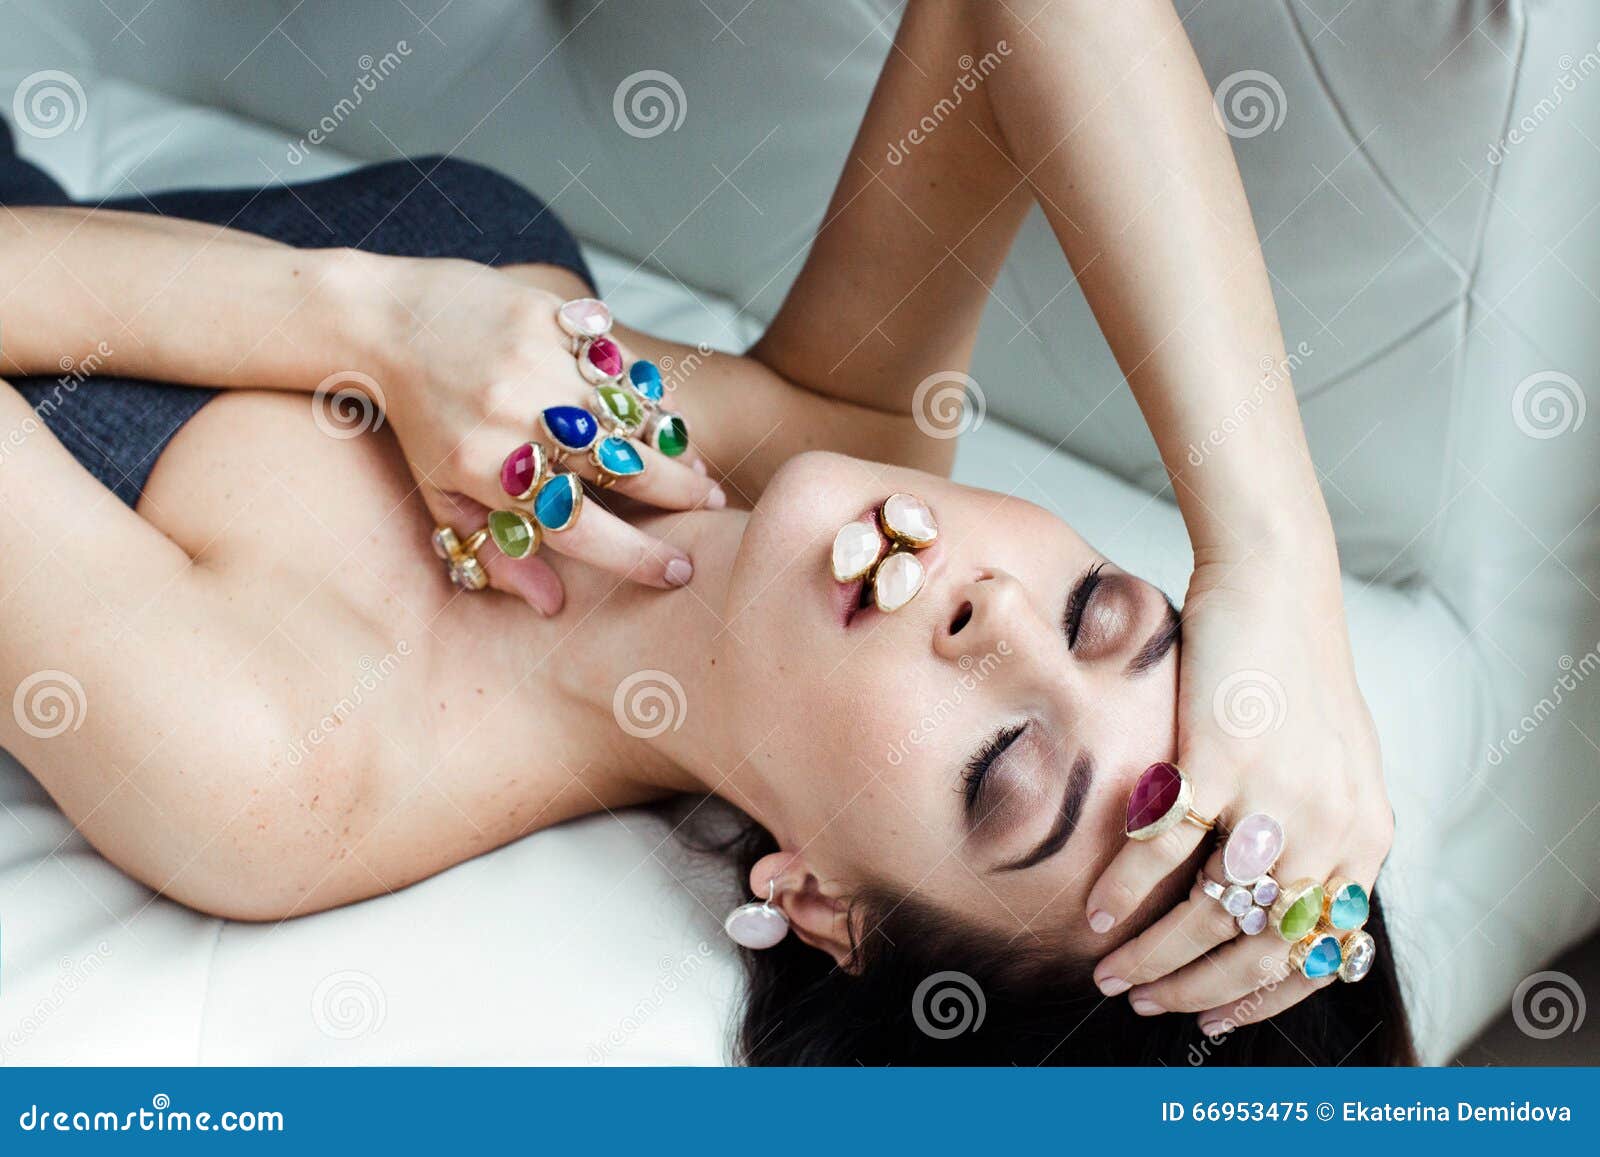 Cute massage girl in ecstacy